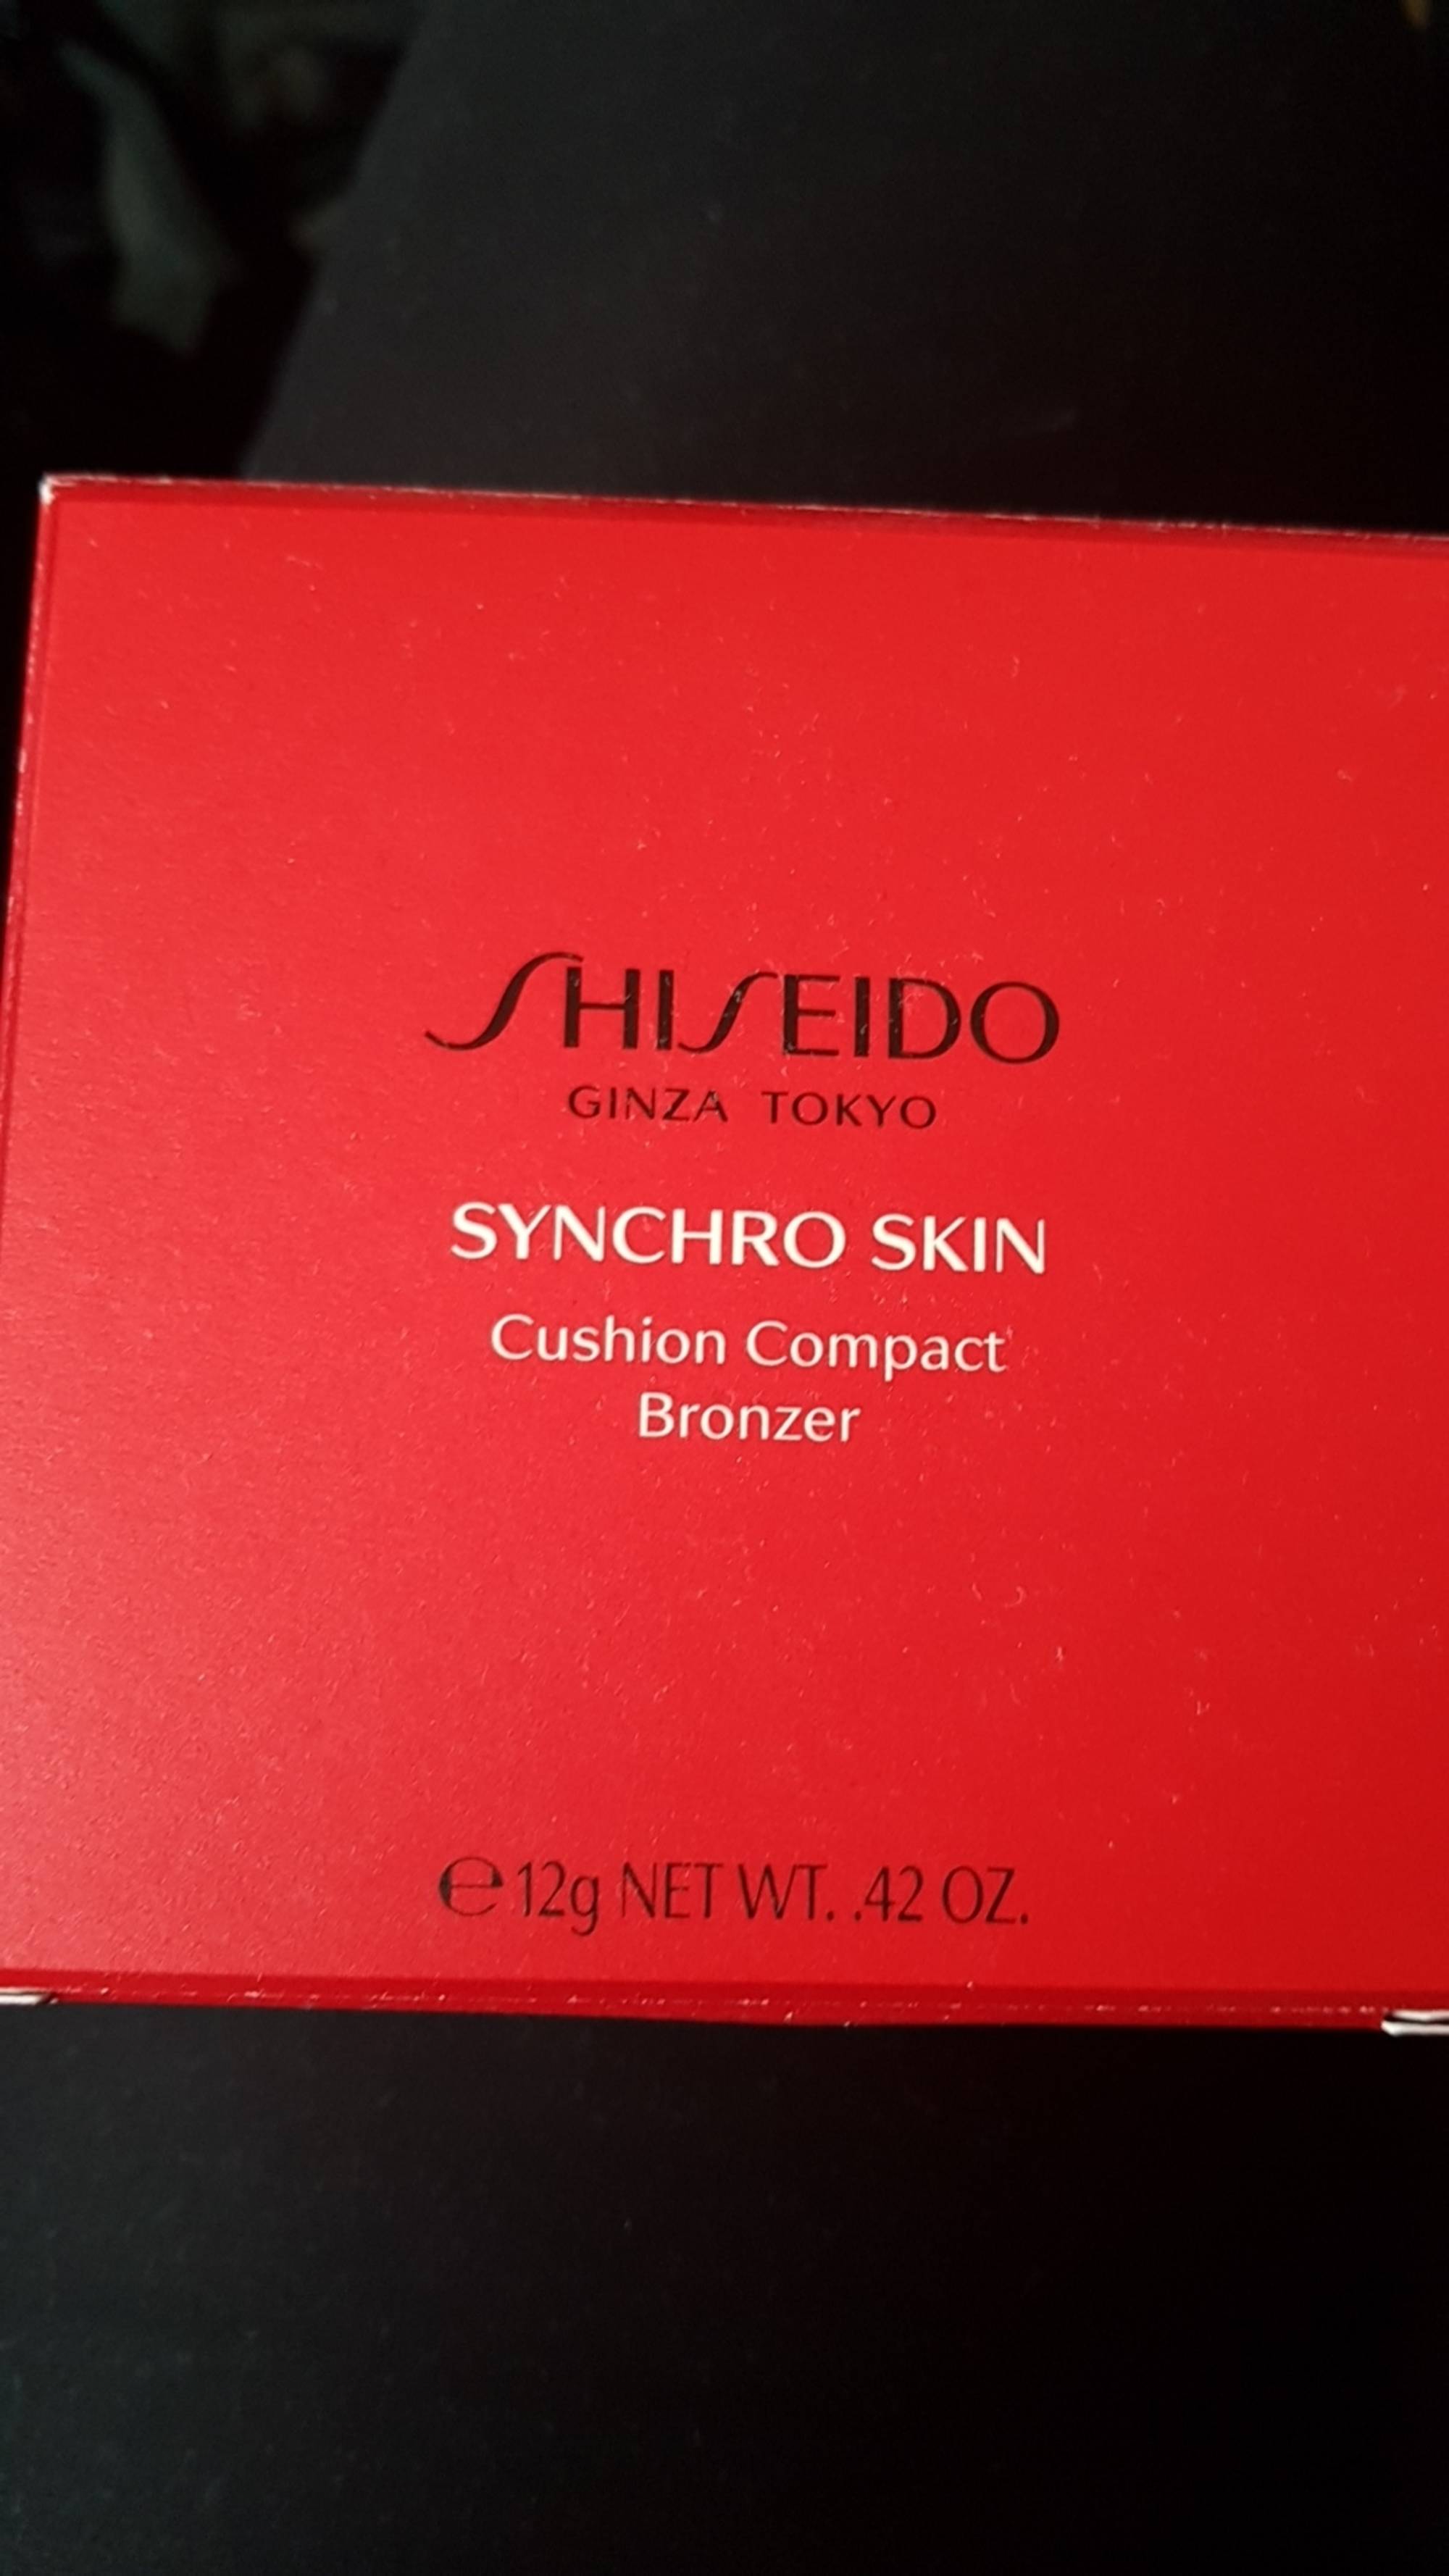 SHISEIDO - Synchro skin - Cushion compact bronzer